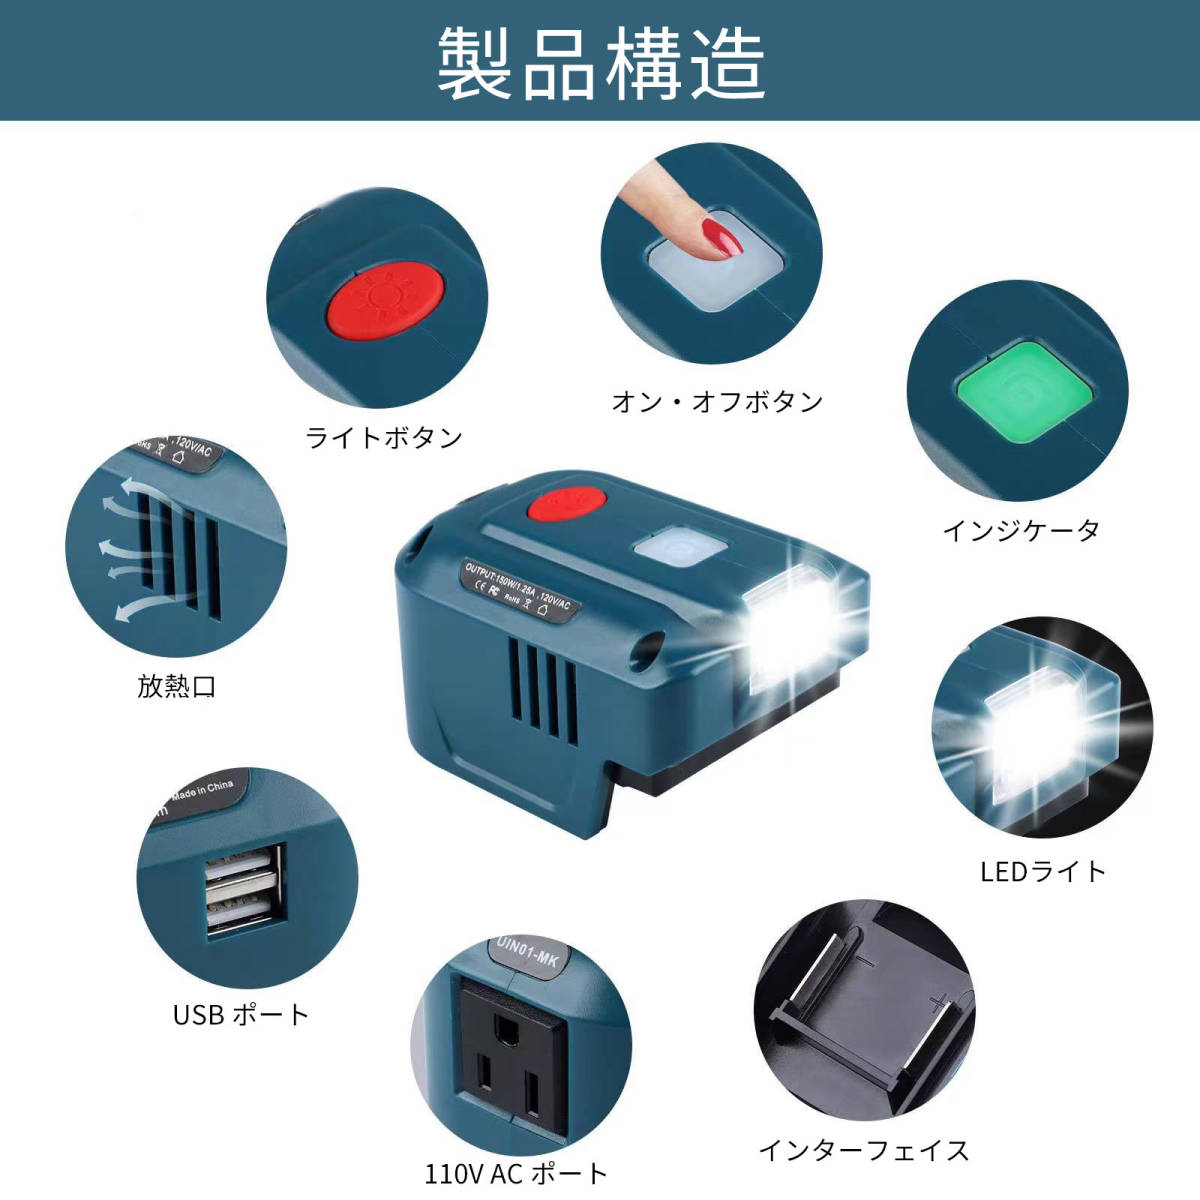 (B) マキタ makita 互換 インバーター ポータブル電源 アダプター AC電源 USB LED ライト付 18V バッテリー モバイル 非常時 100V 家庭用_画像6